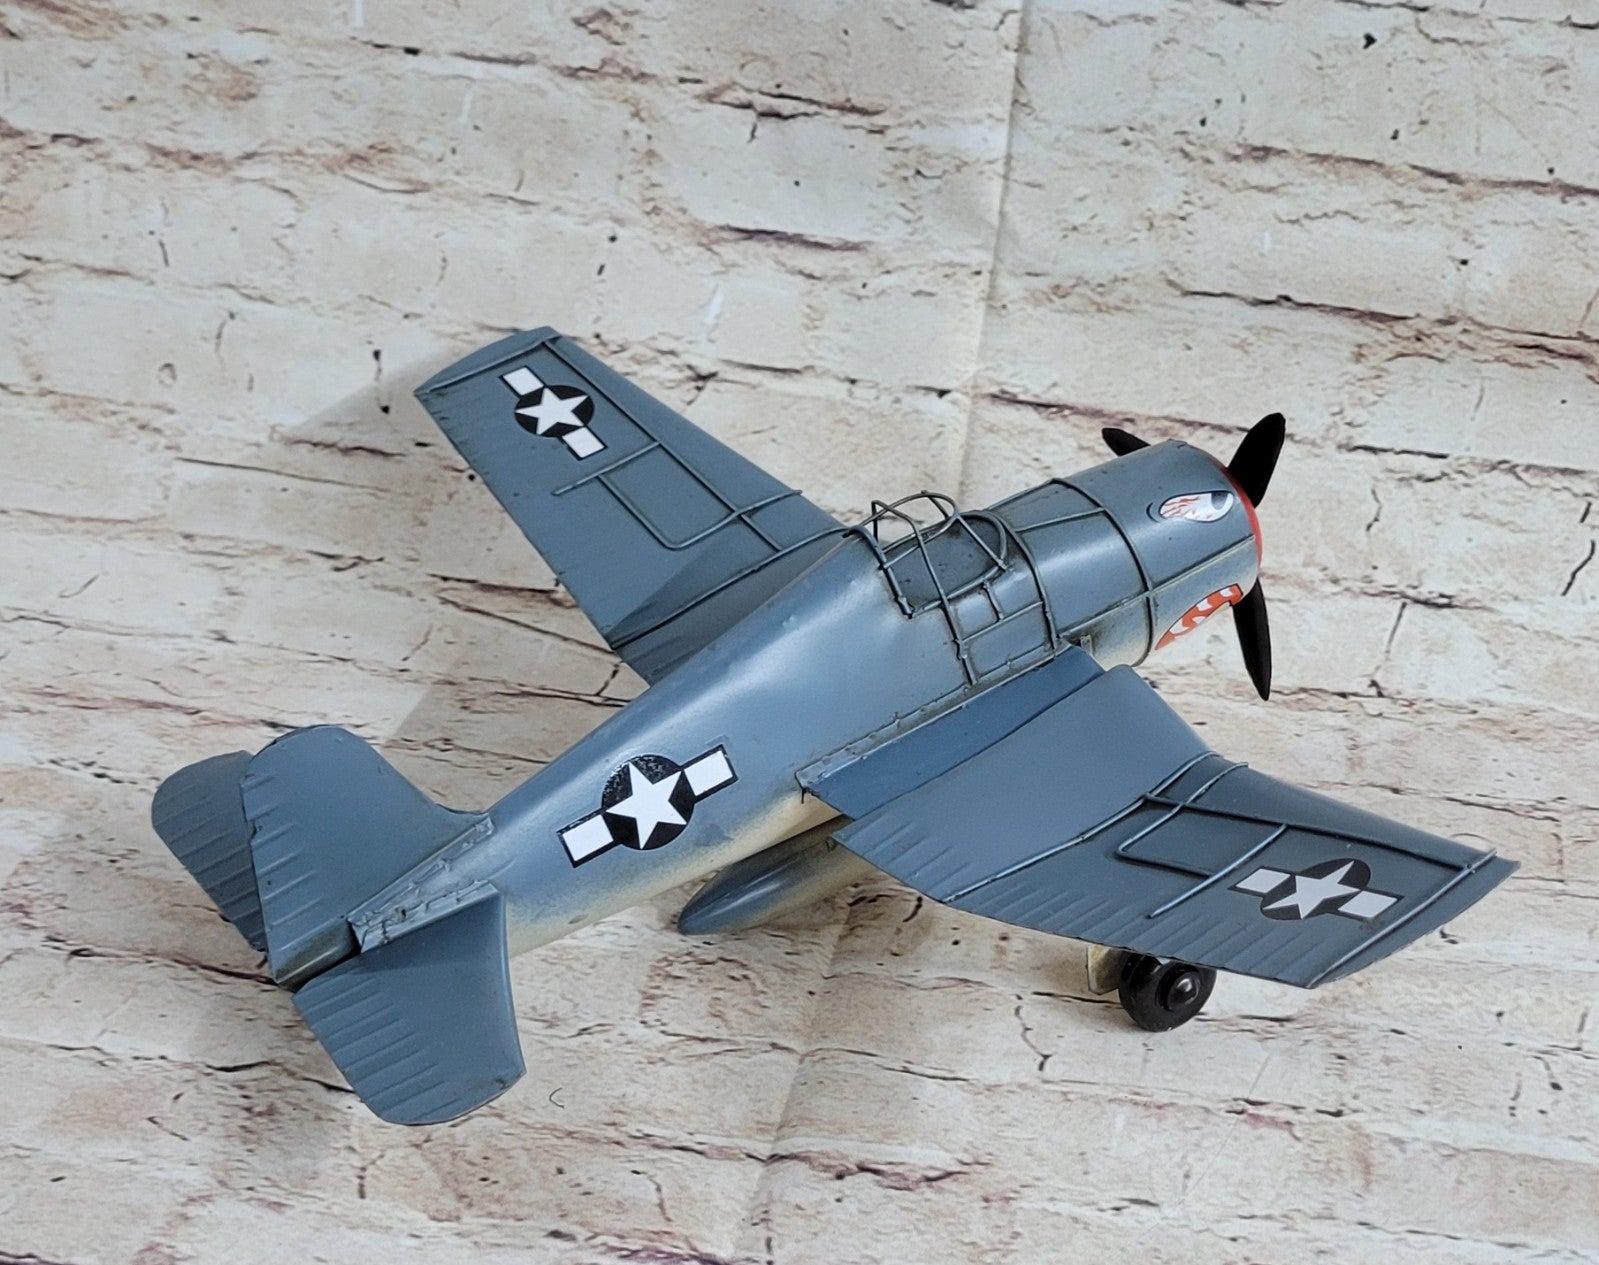 Grey Mustang P-51 was an American long-range single-seat fighter Plane